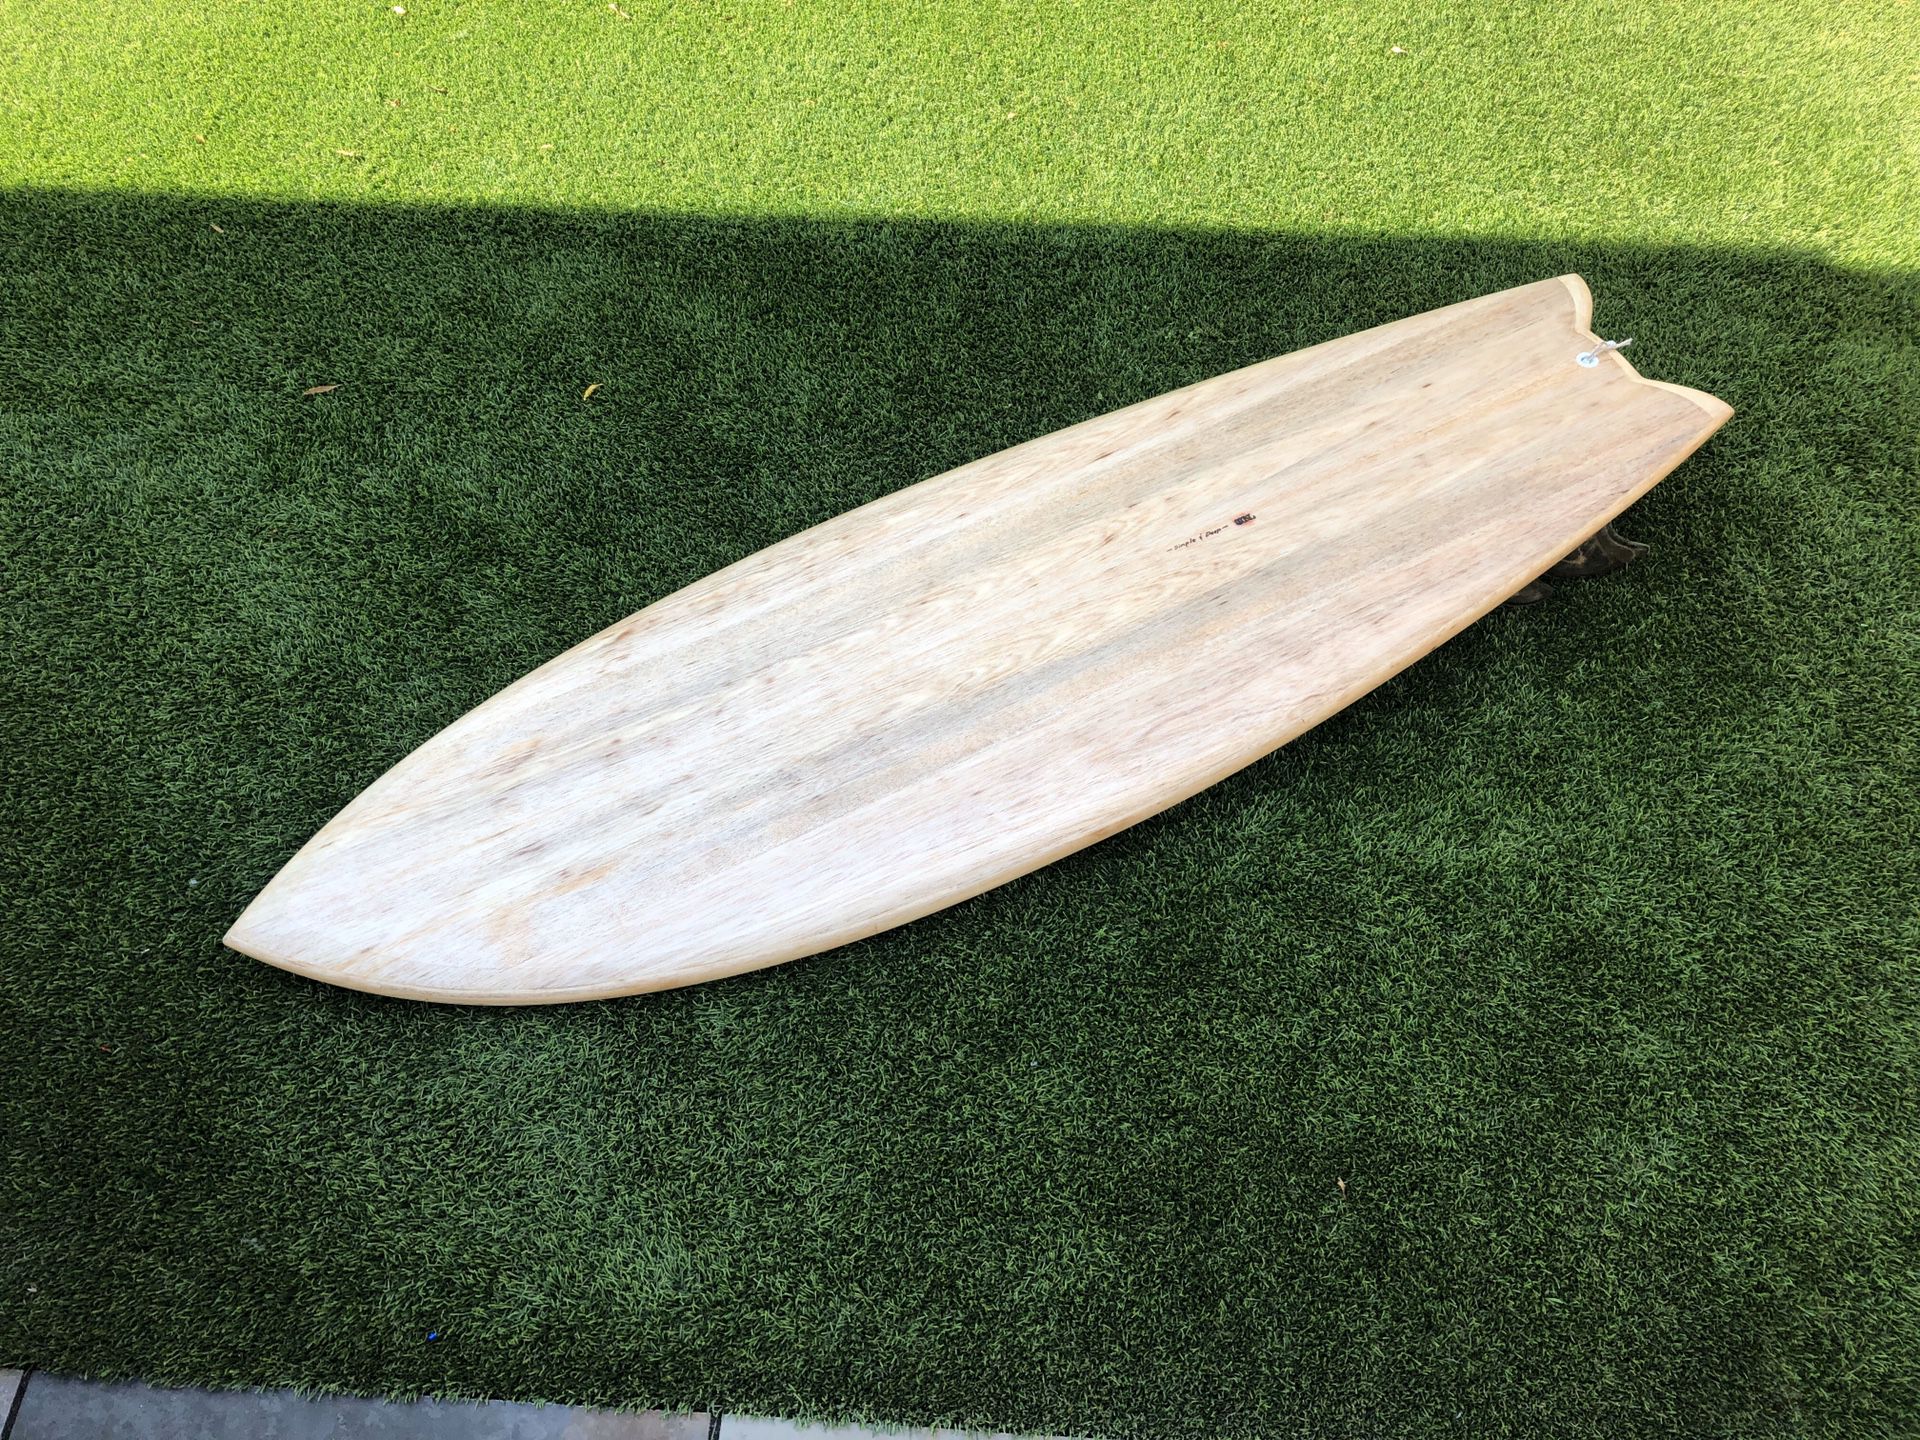 Twin fin surfboard